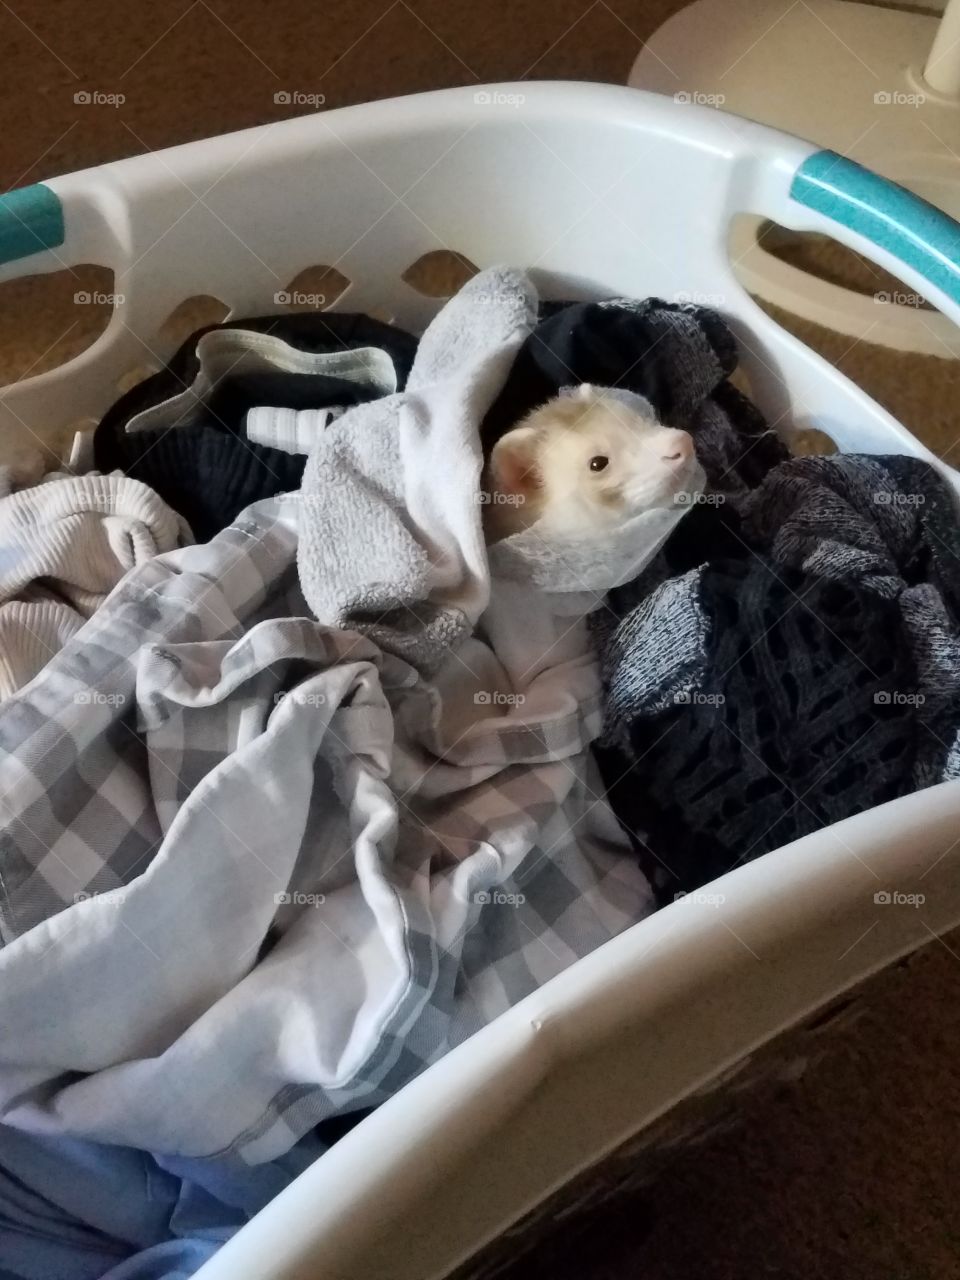 laundry ferret